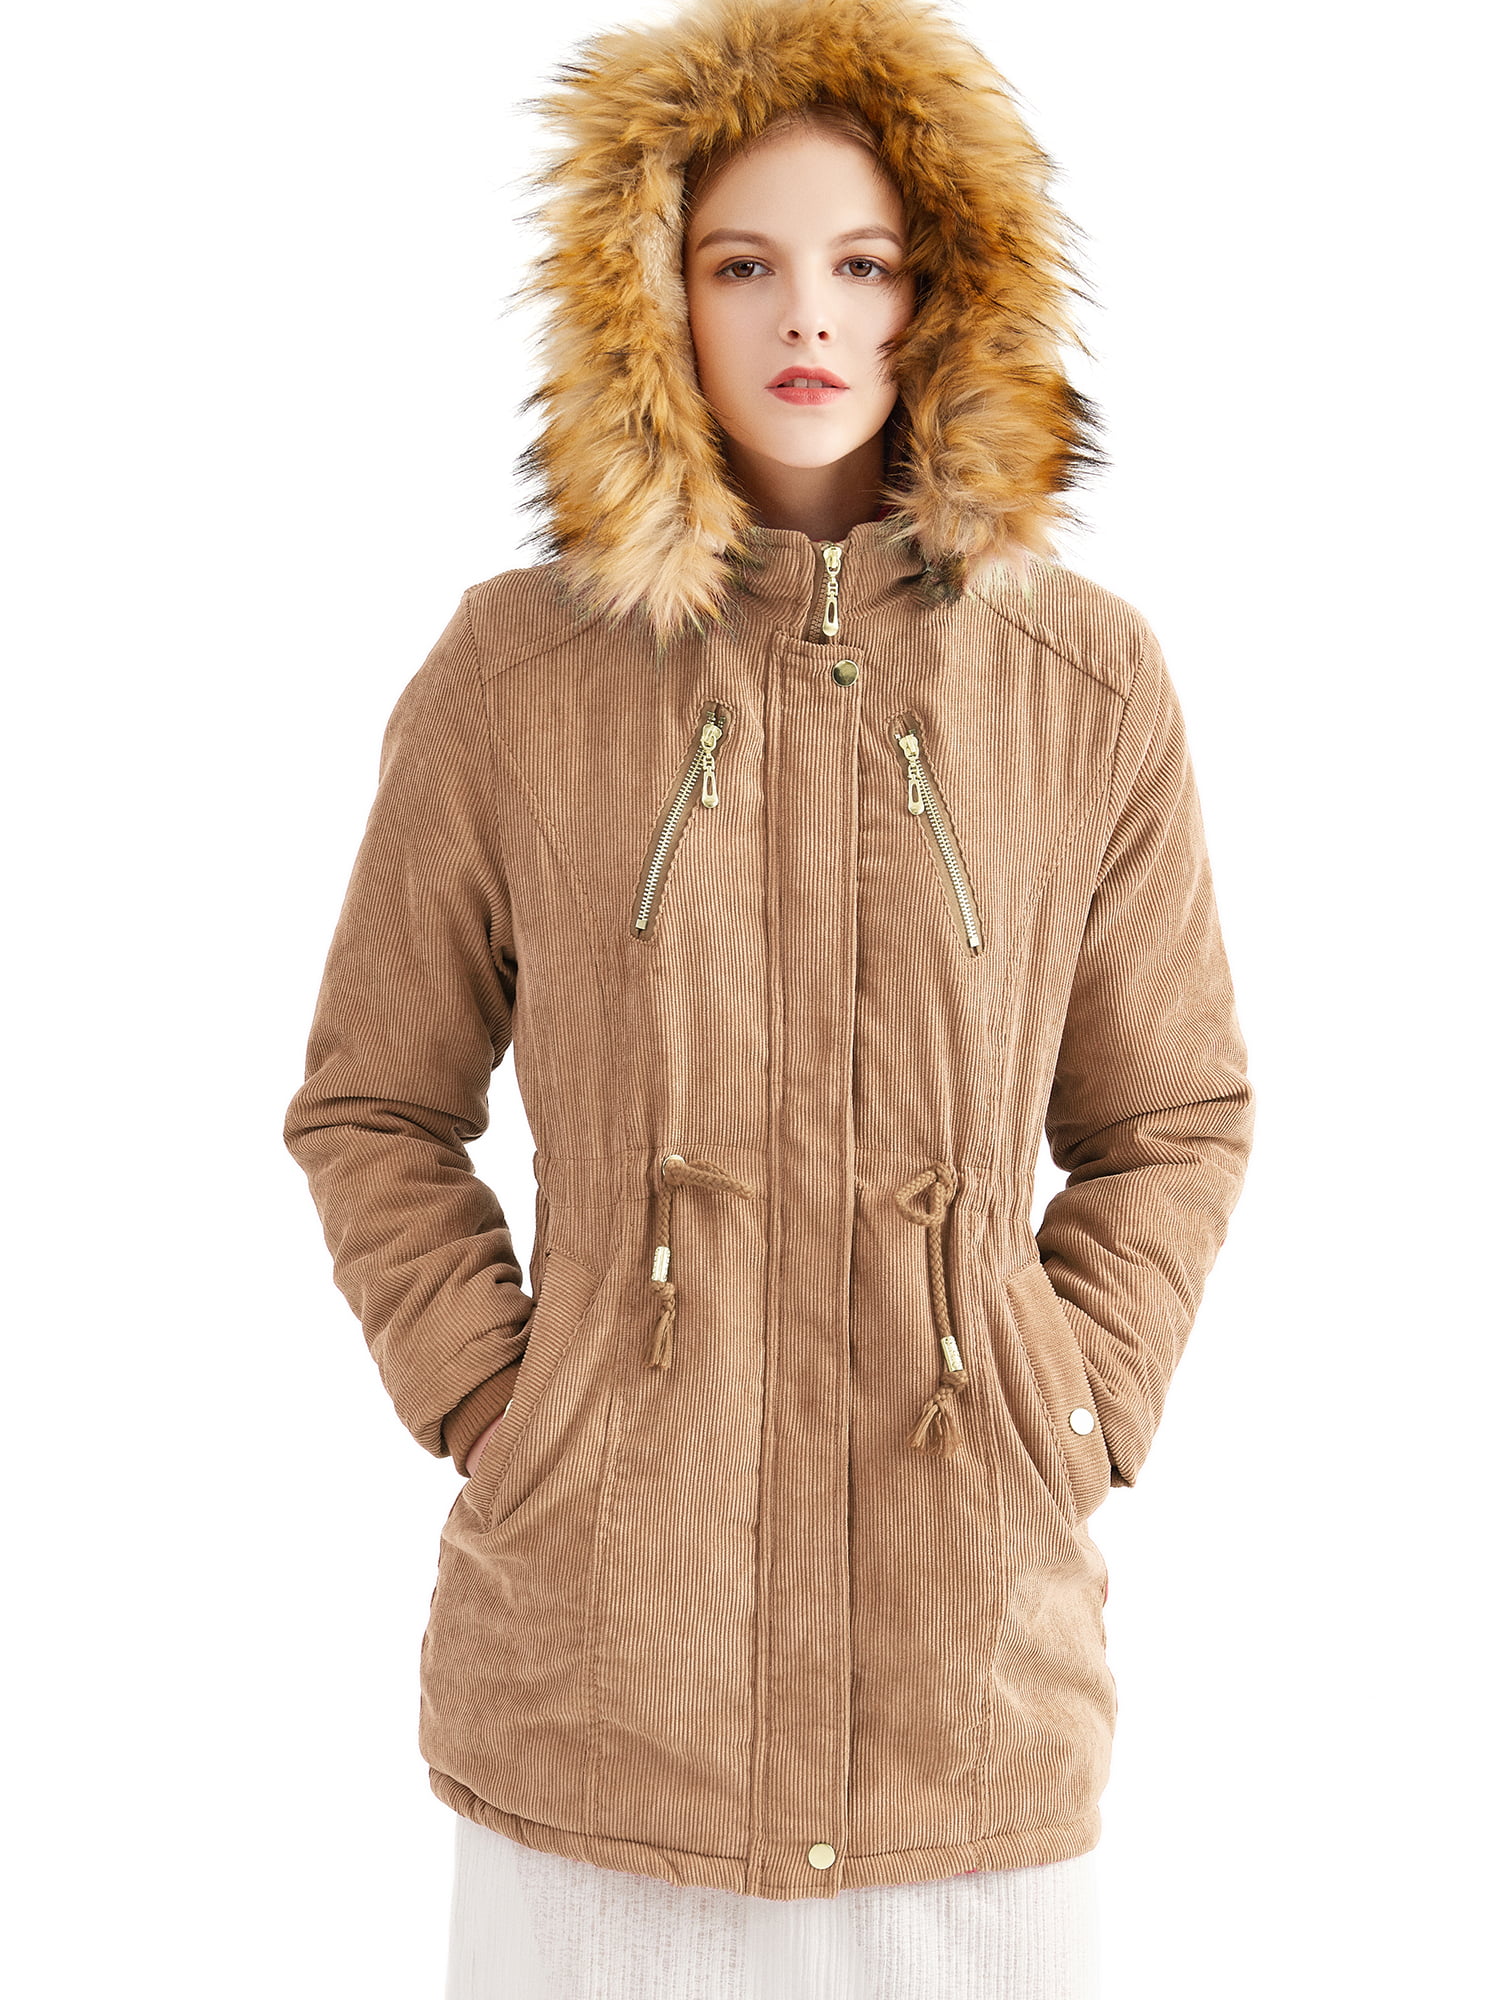 Willsa Plus Thick Warm Coat Clearance Womens Winter Outwear Hoodie Jackets